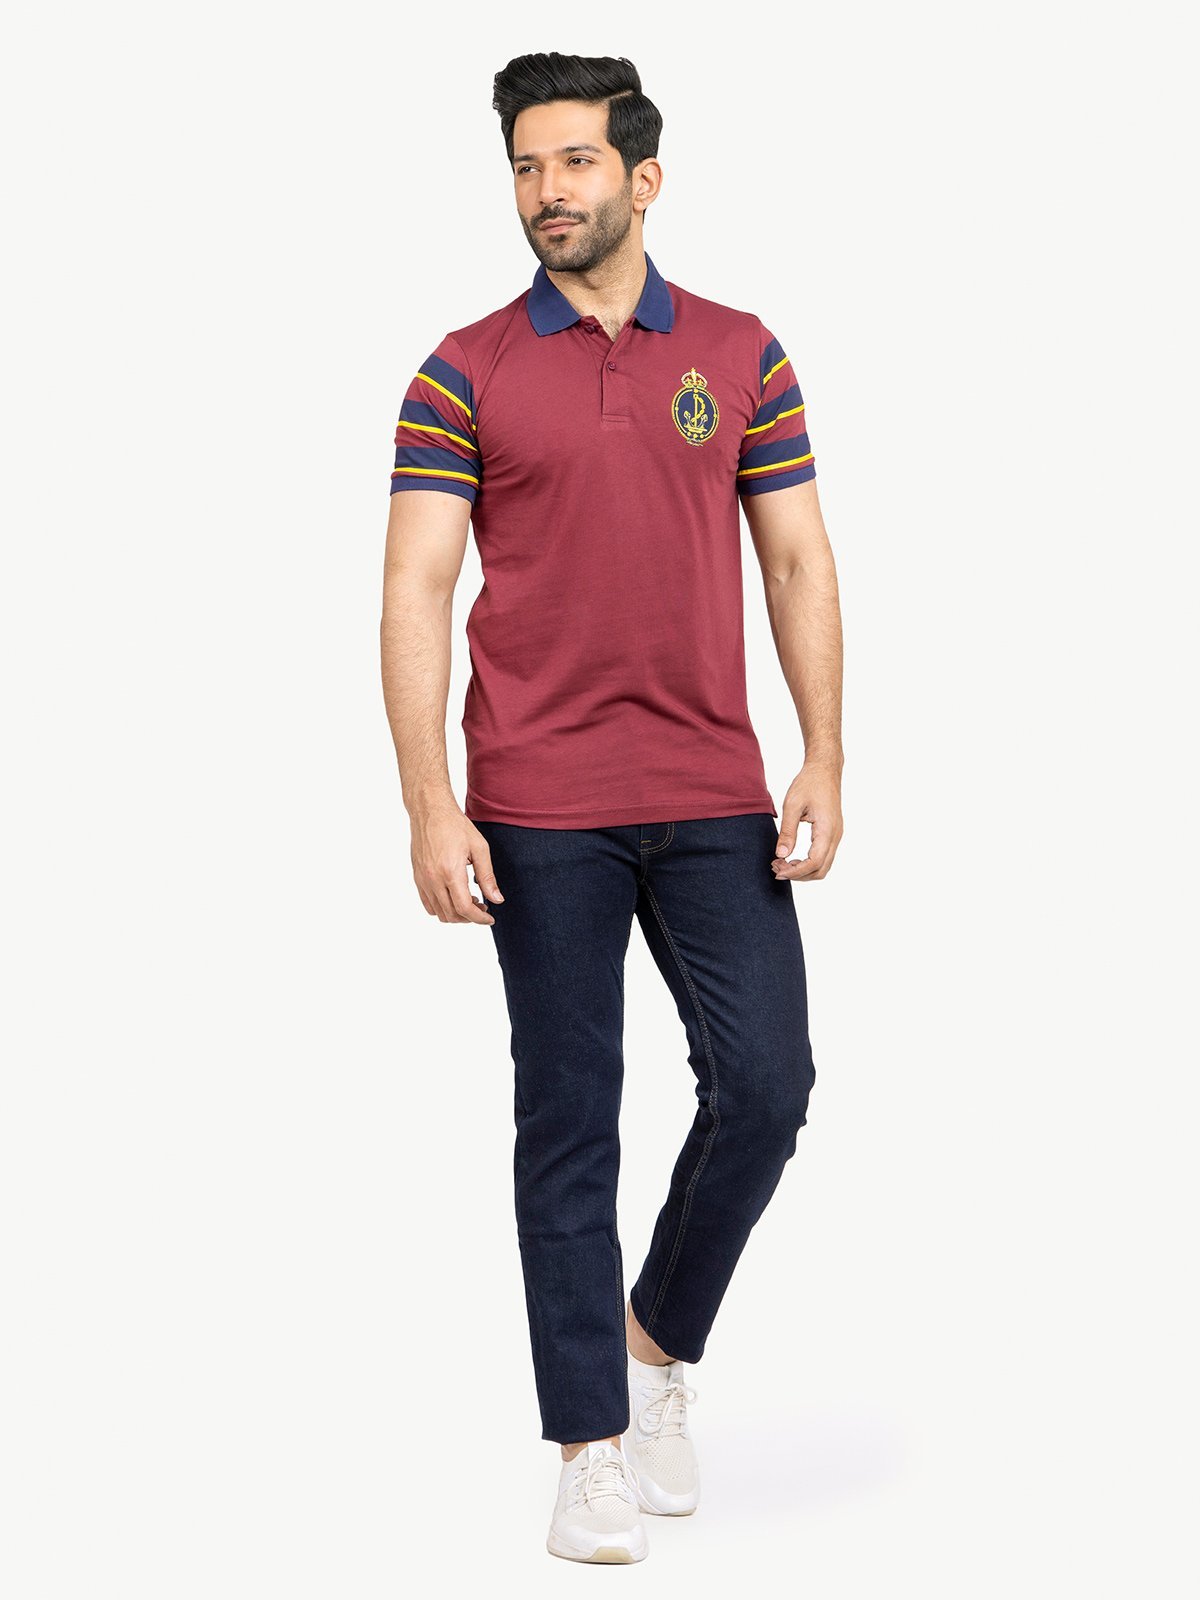 Men's Red Polo Shirt - EMTPS21-022